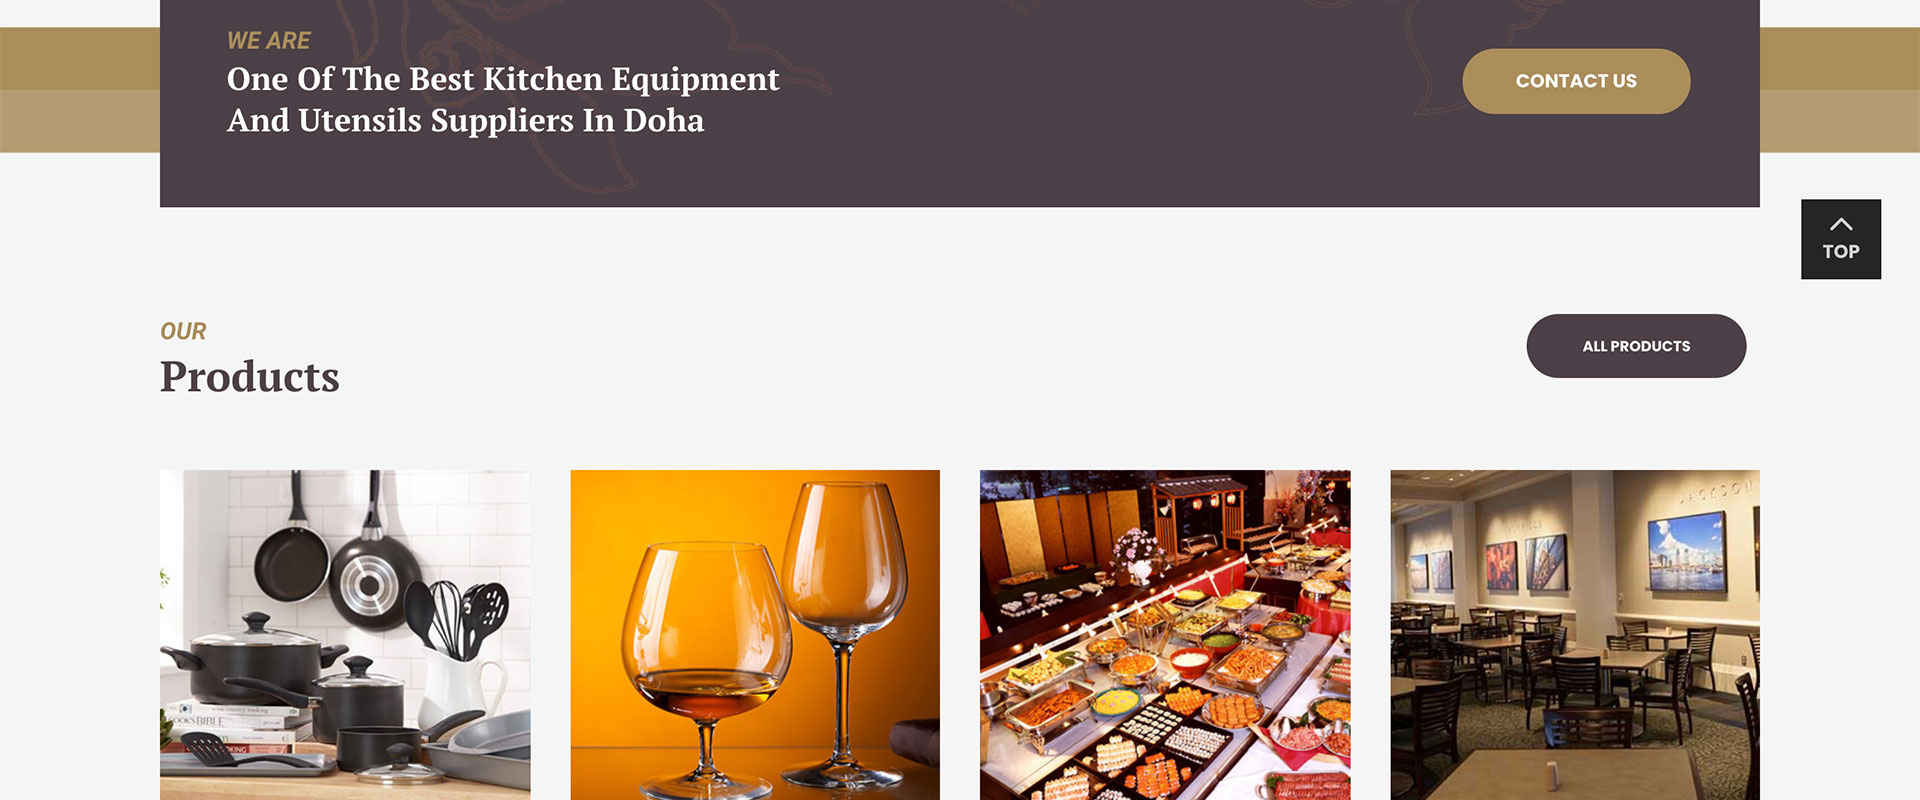 Royal Art Kitchen Equipment Qatar